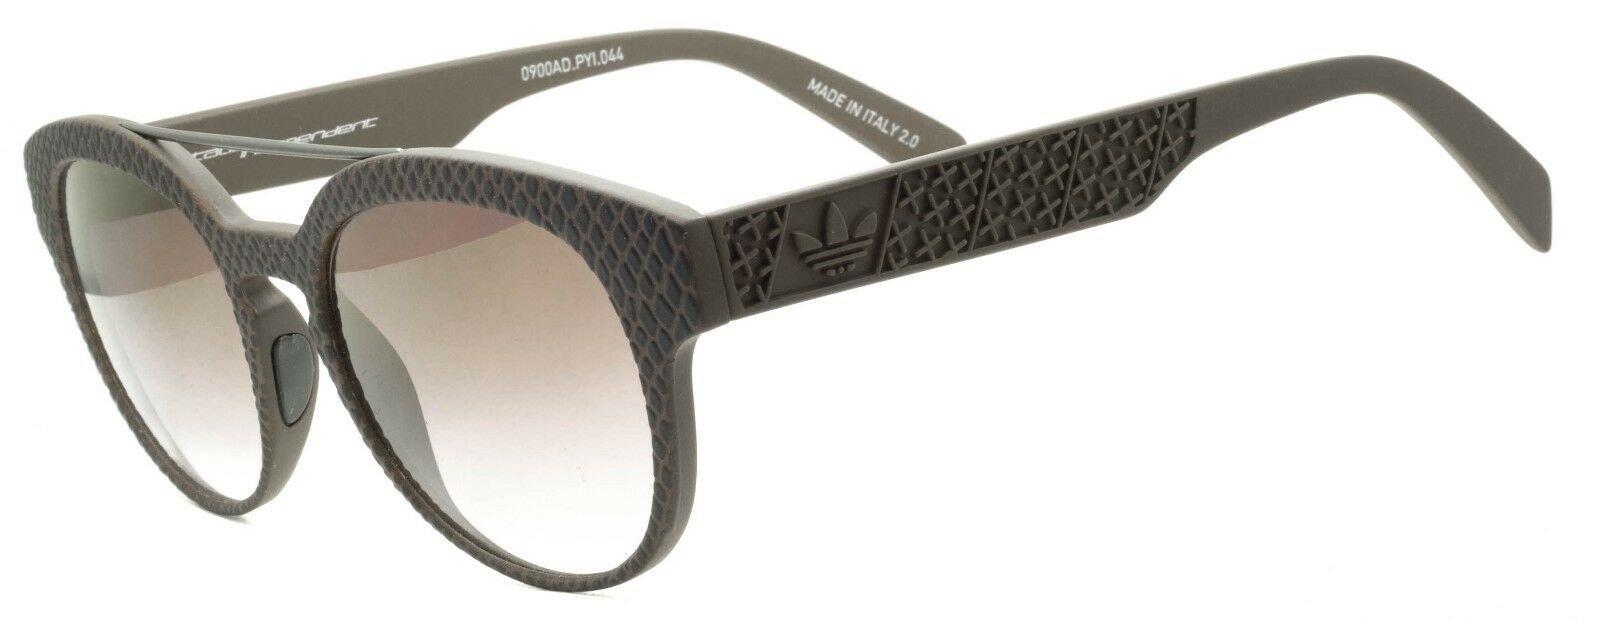 muy Portero Desnatar ITALIA INDEPENDENT ADIDAS 0900AD.PYI.044 Sunglasses Shades Frames  Eyeglasses-New - GGV Eyewear